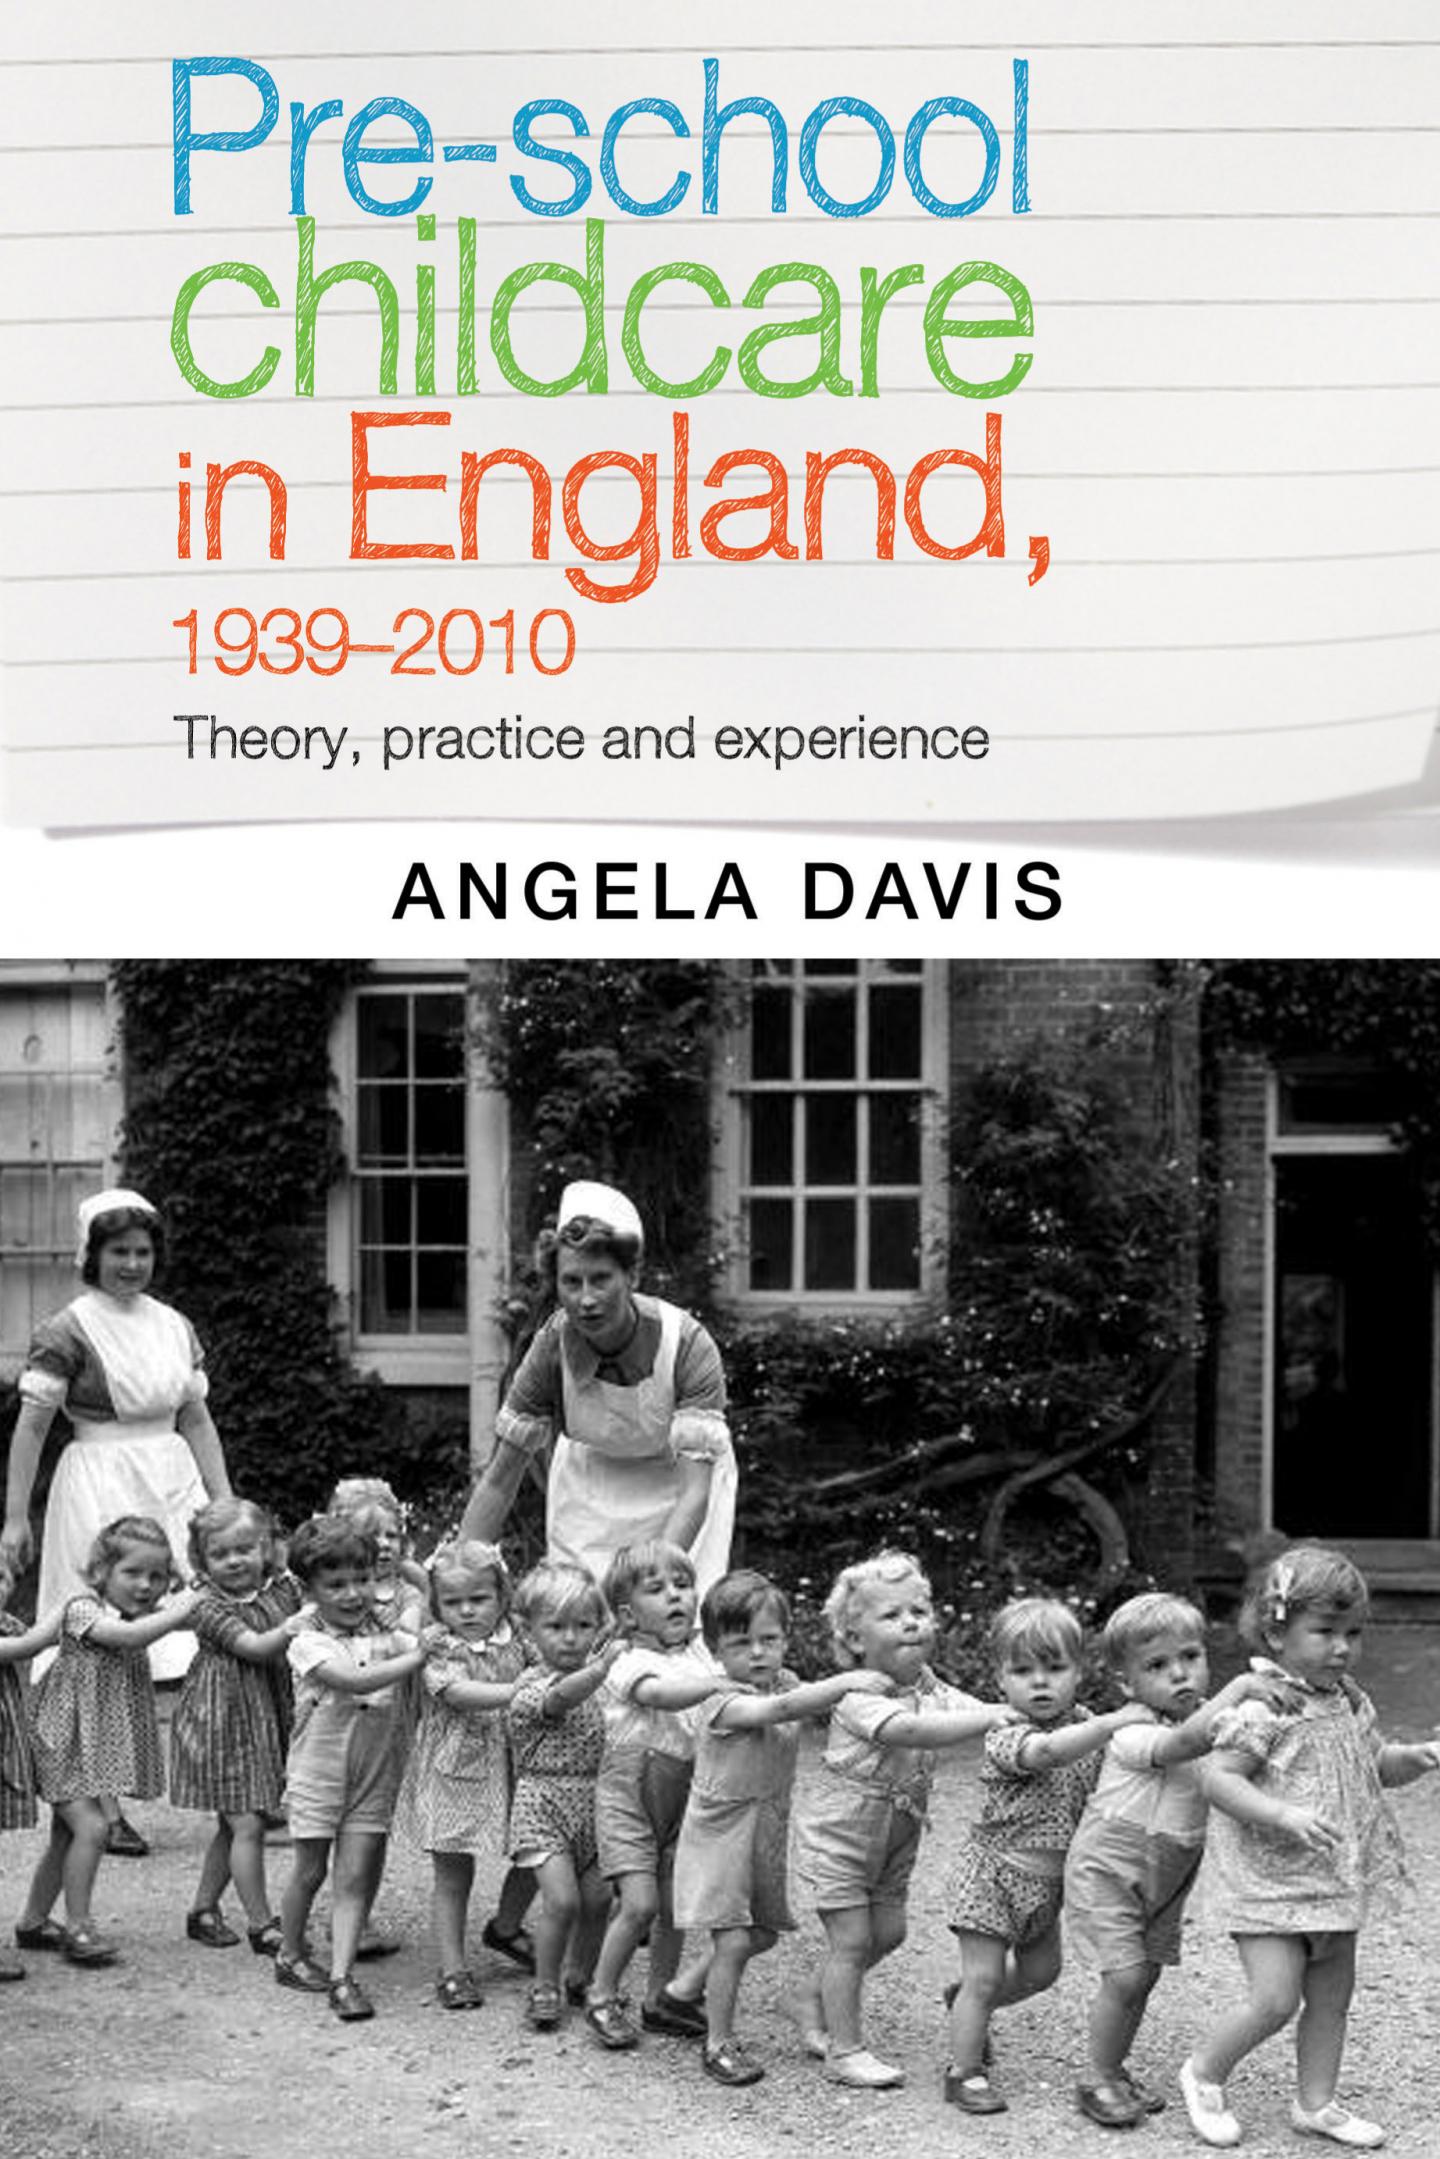 Pre-school childcare in England, 1939-2010